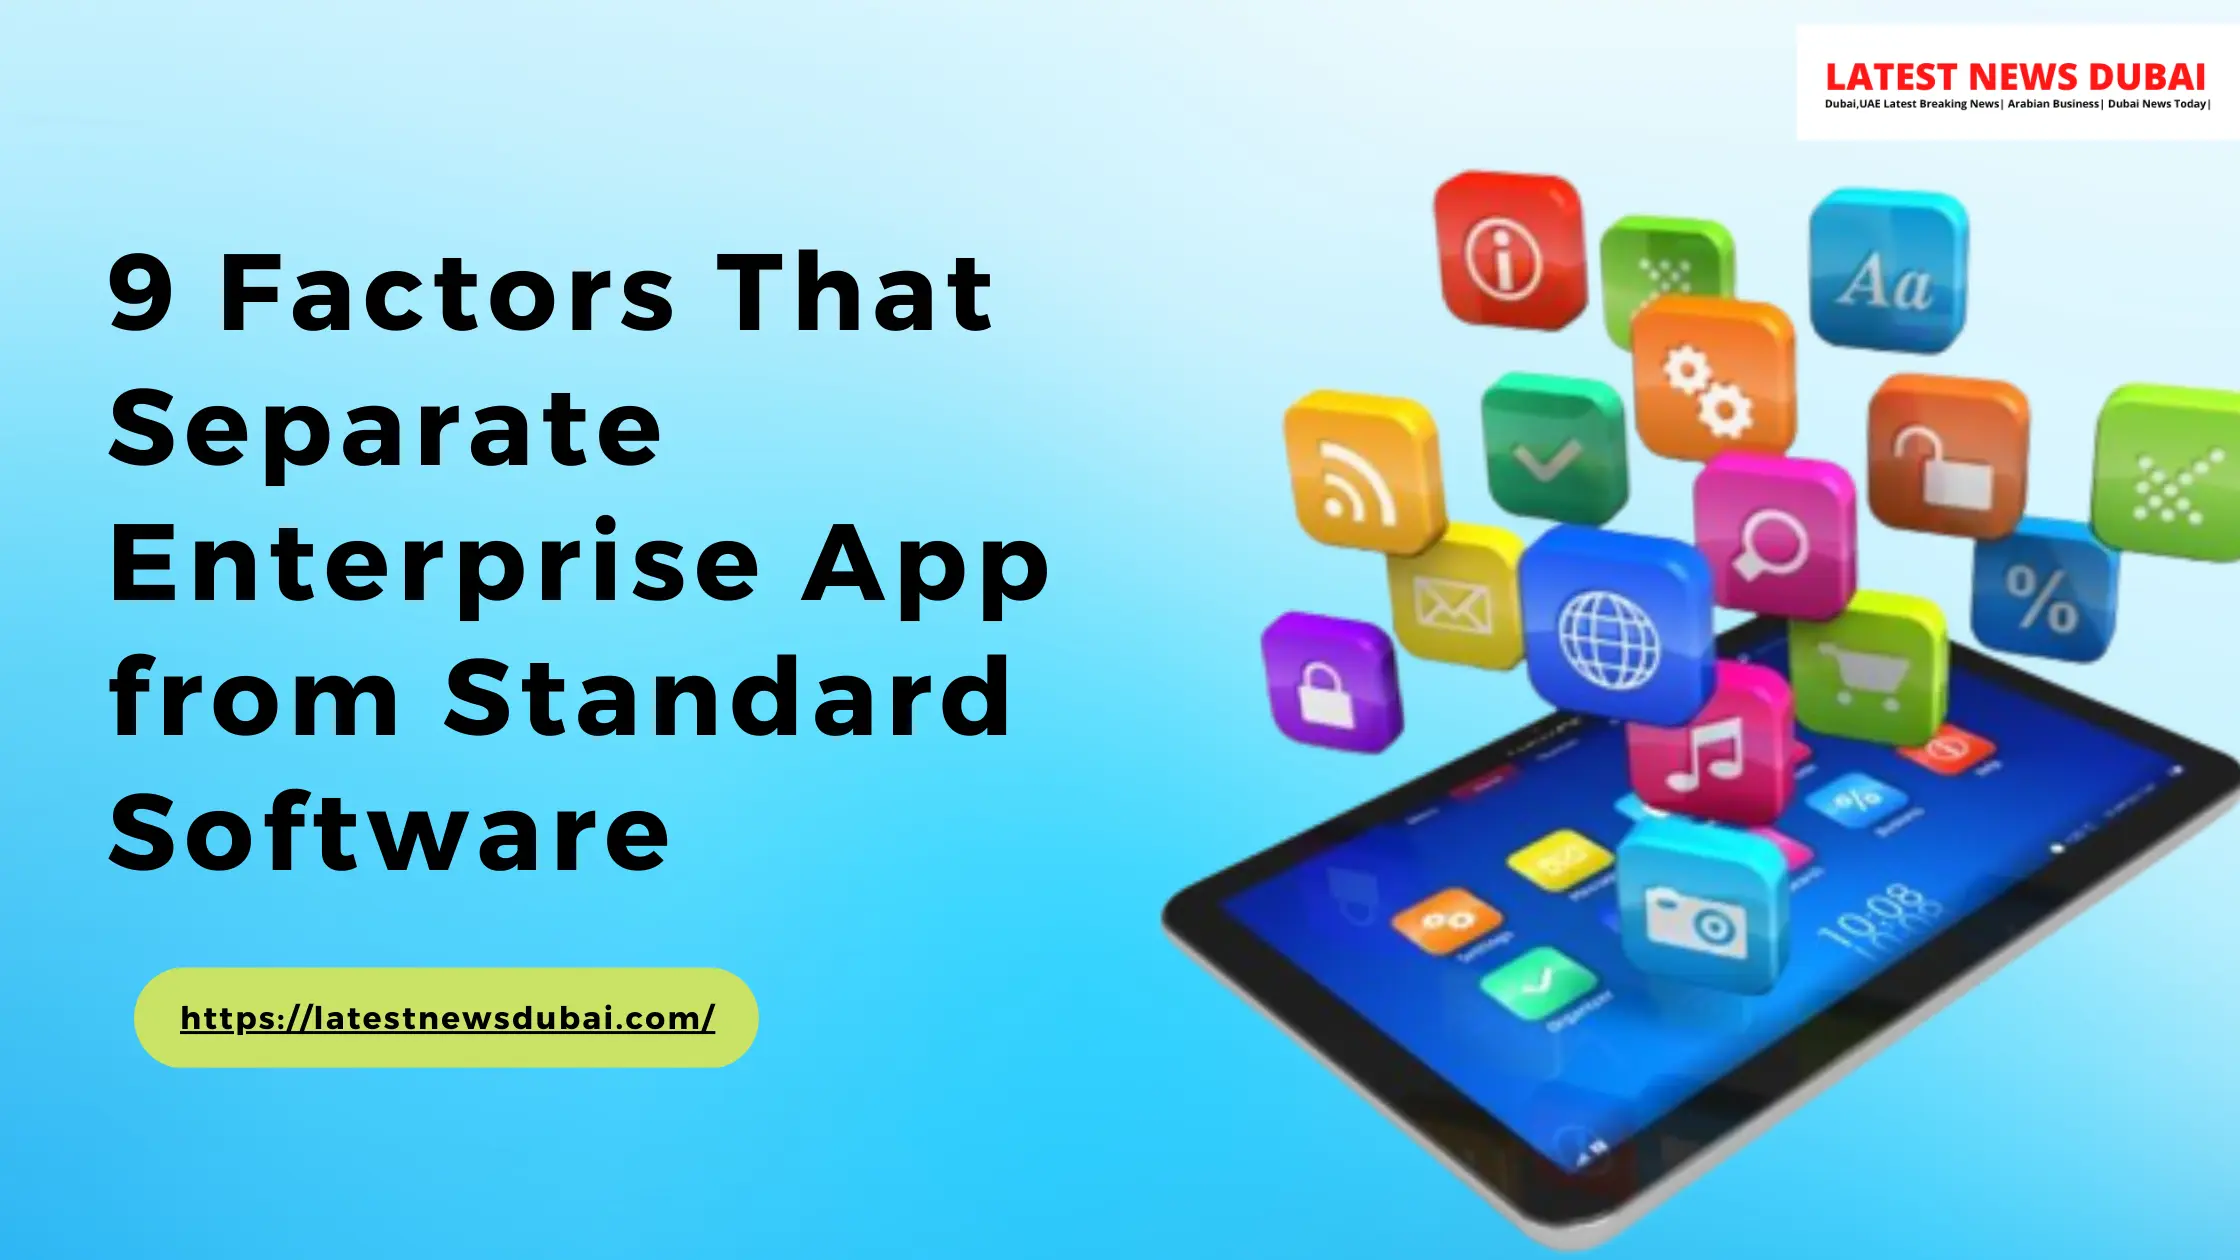 Enterprise App from Standard Software